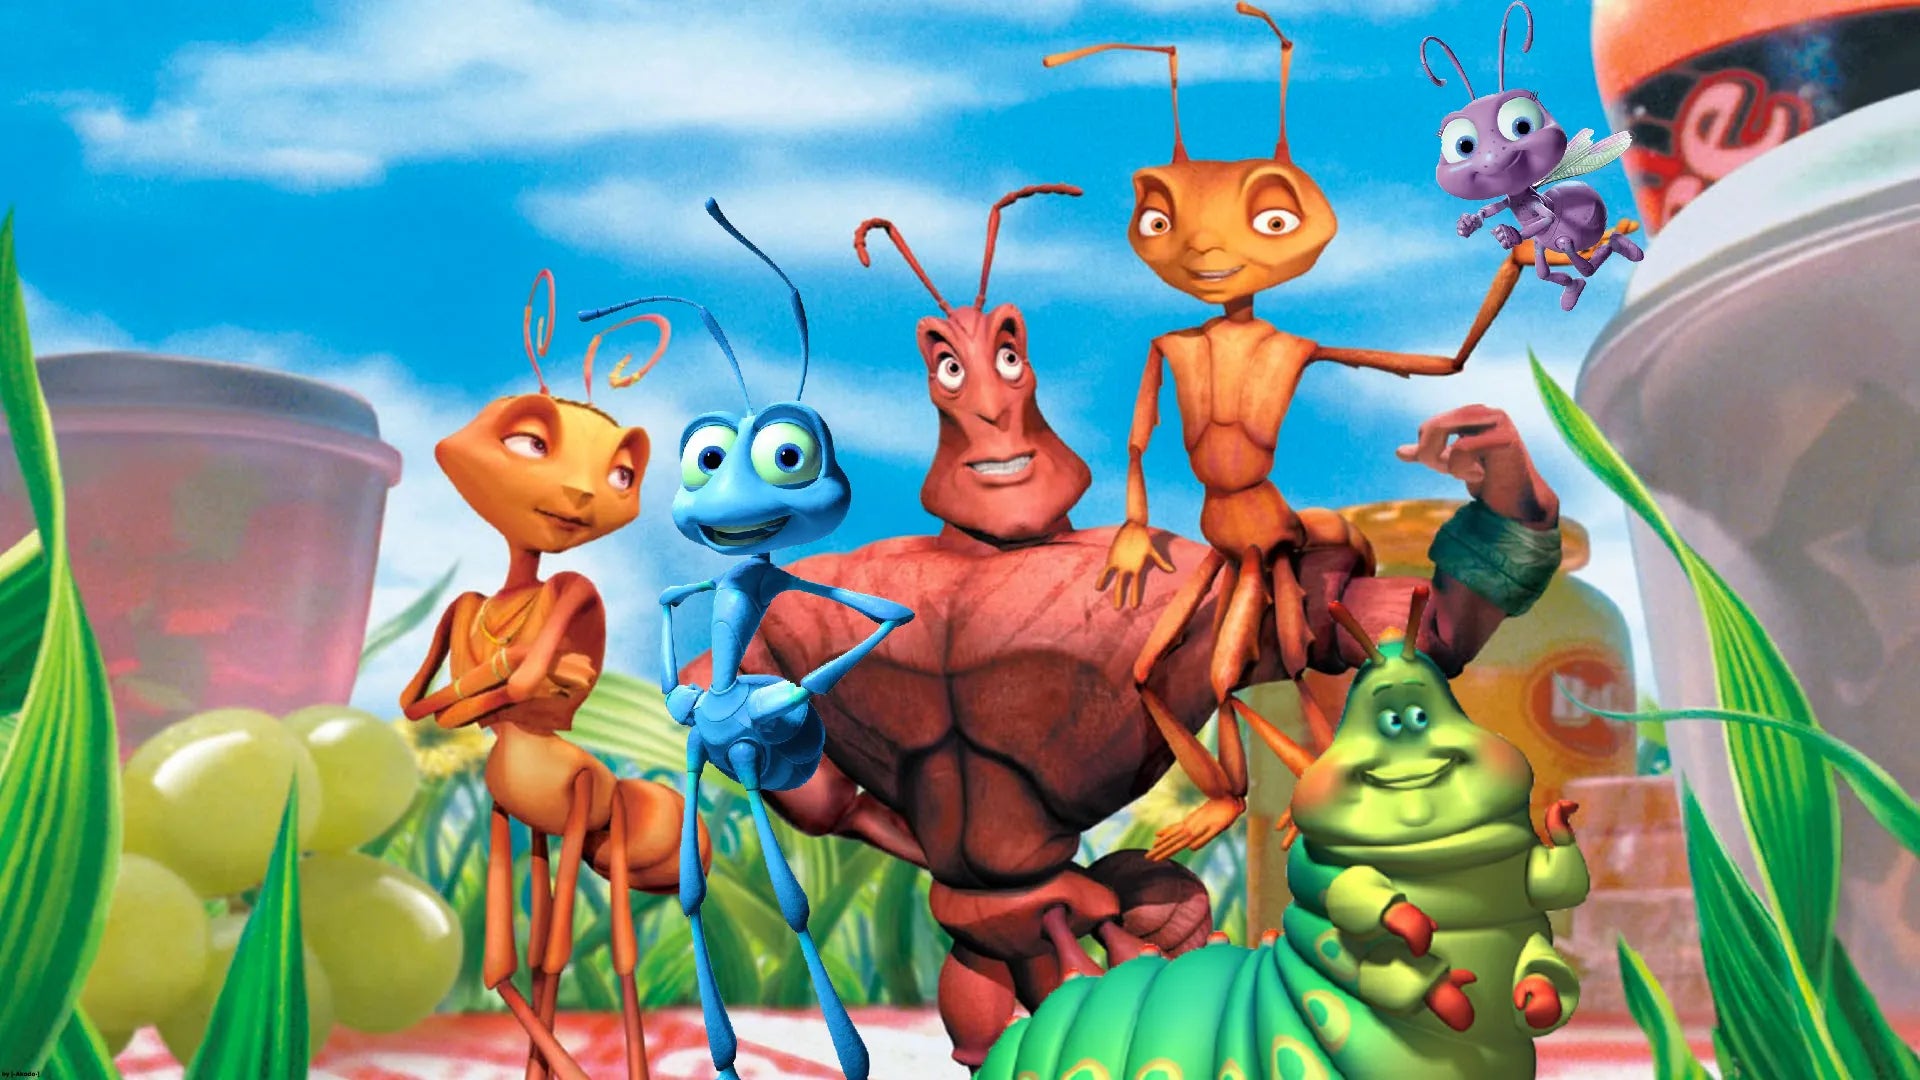 Disney Pixar's A Bug's Life